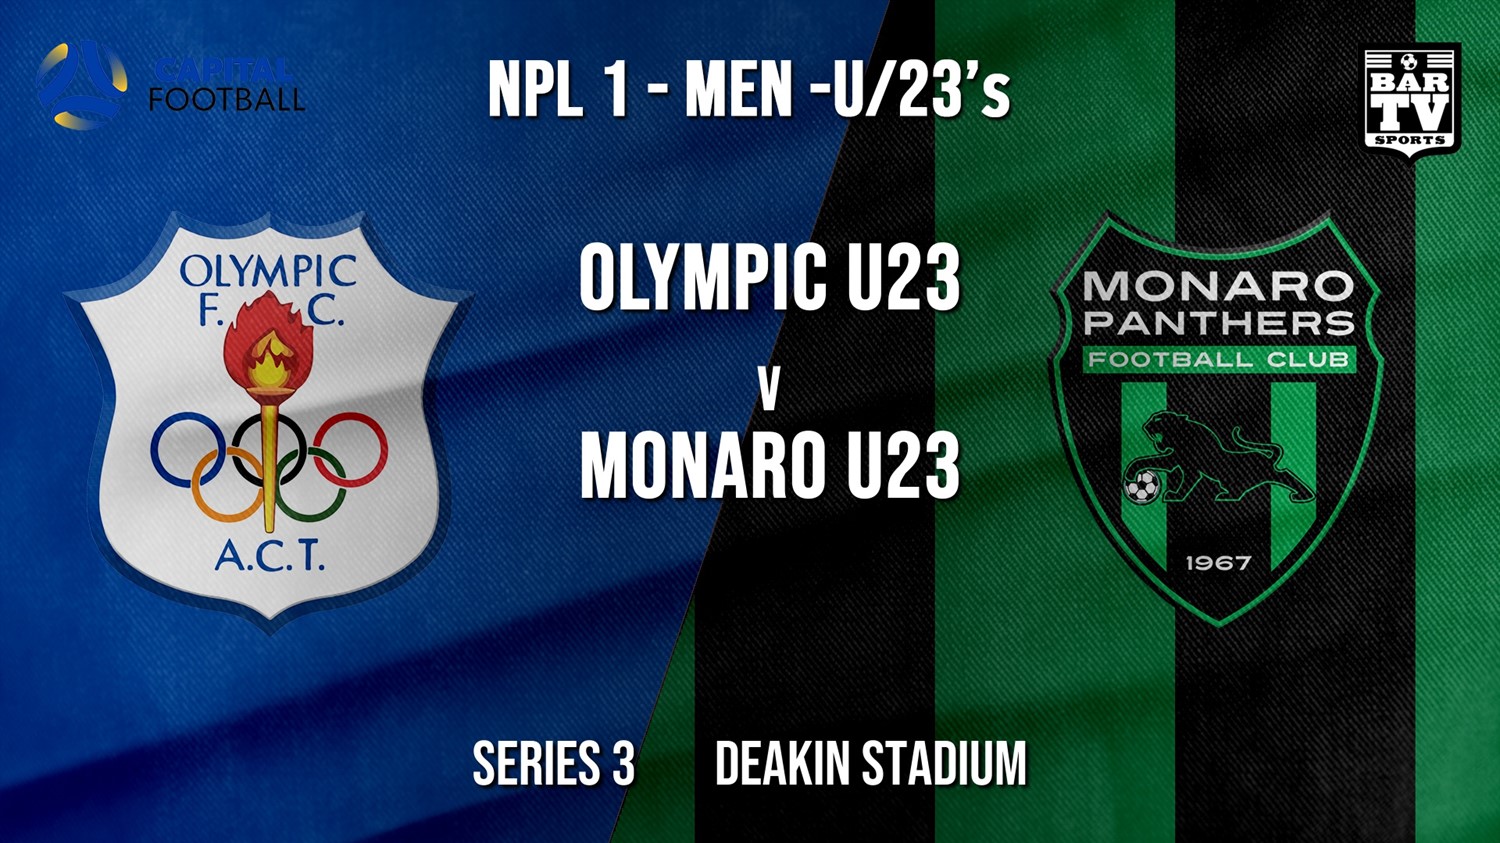 NPL1 Men - U23 - Capital Football  Series 3 - Canberra Olympic U23 v Monaro Panthers U23 Minigame Slate Image